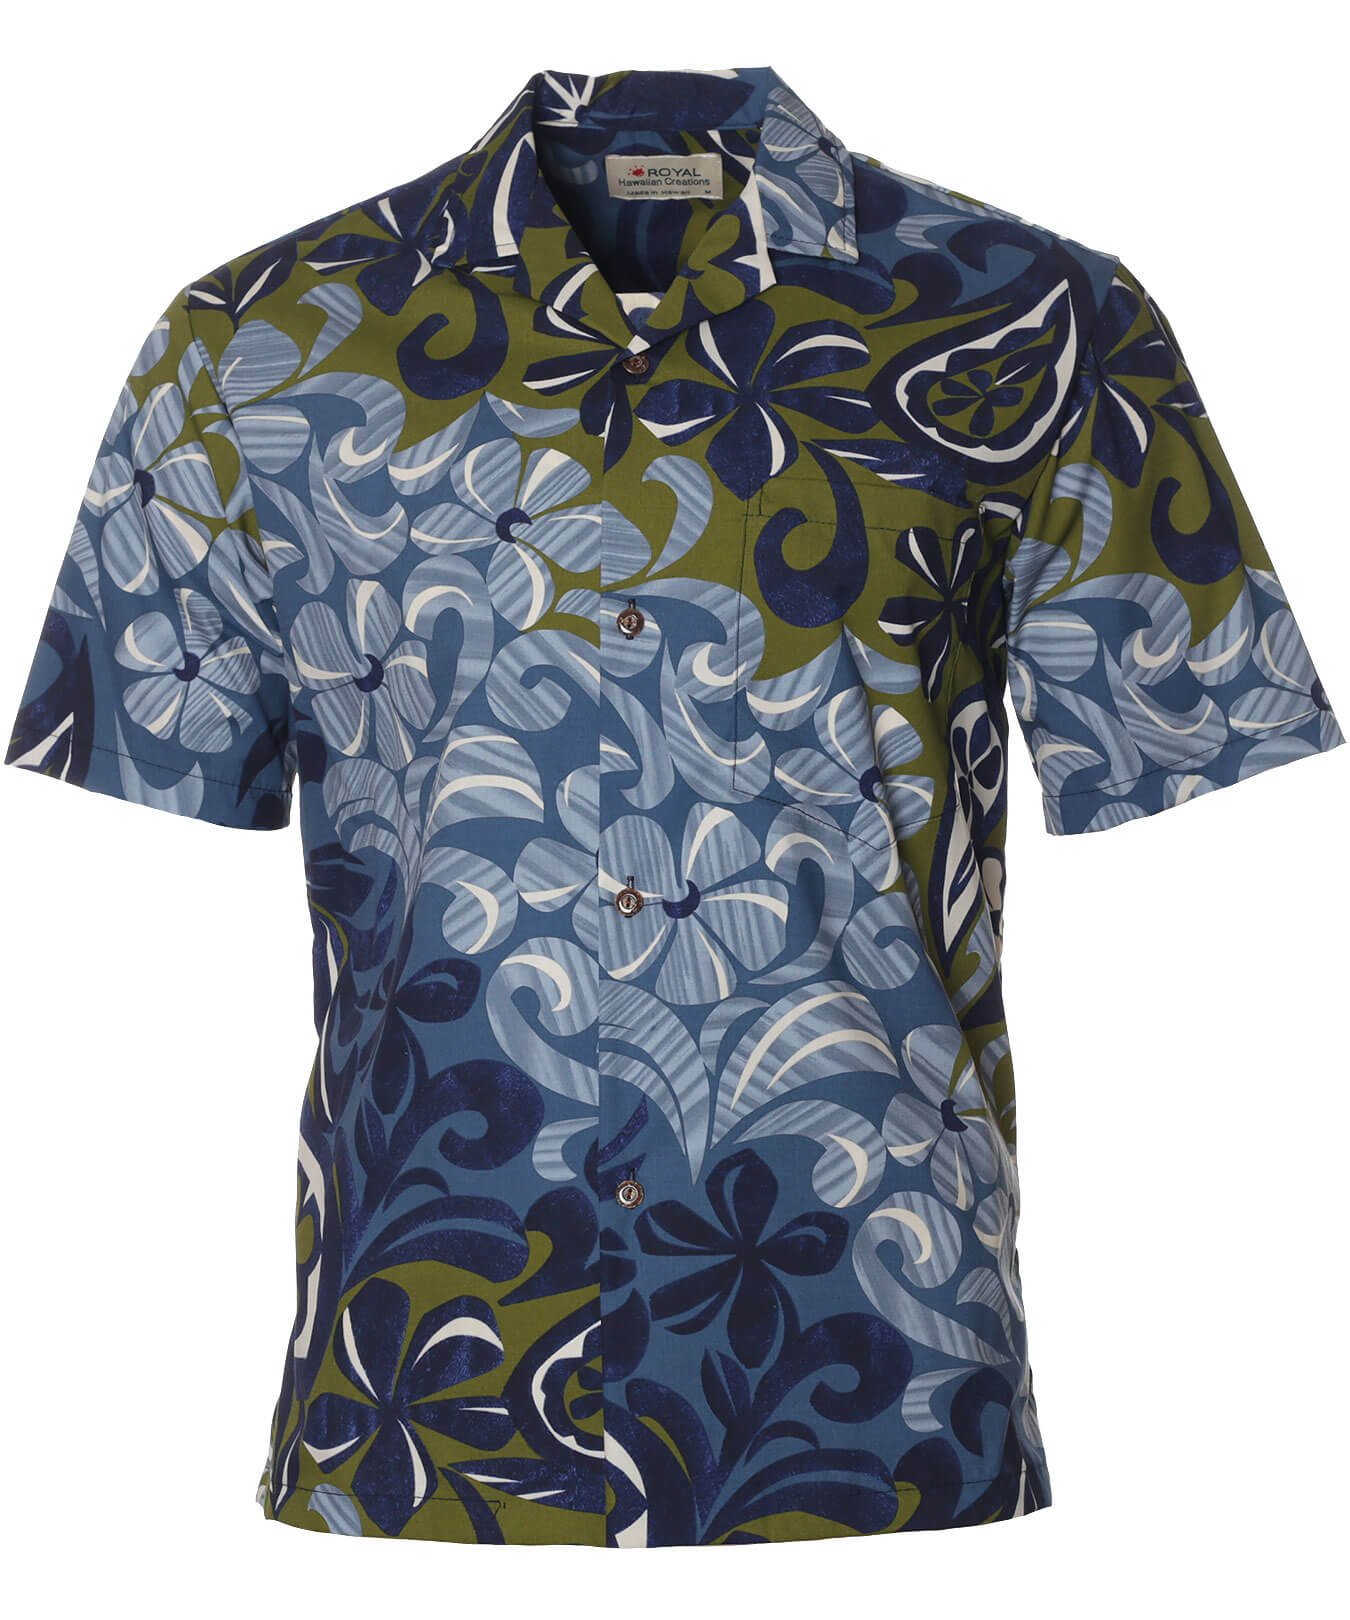 Polemic Cotton Men's Hawaiian Shirt Ocean Blue